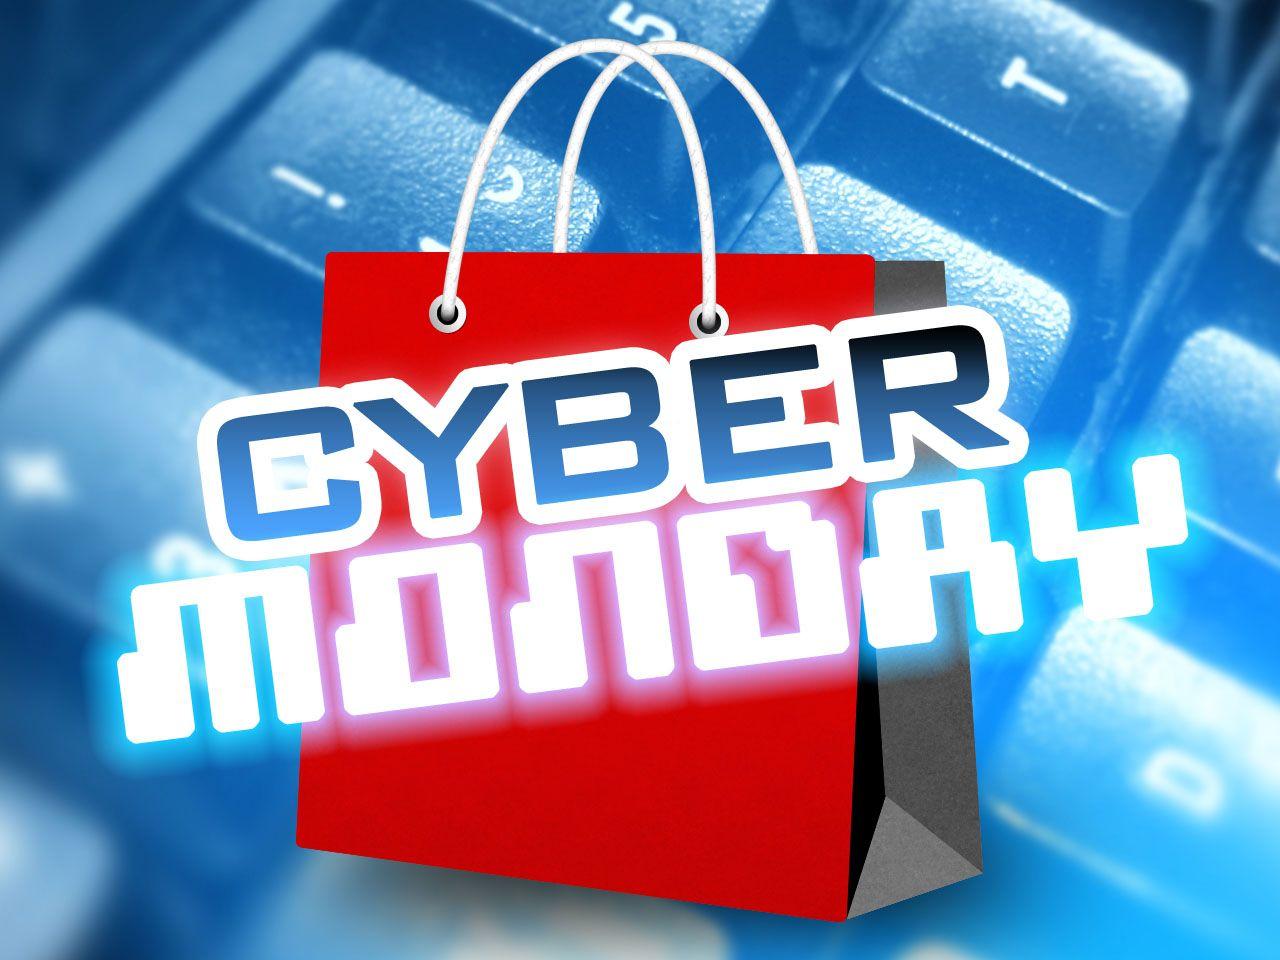 Best Cyber Monday Deals 2014